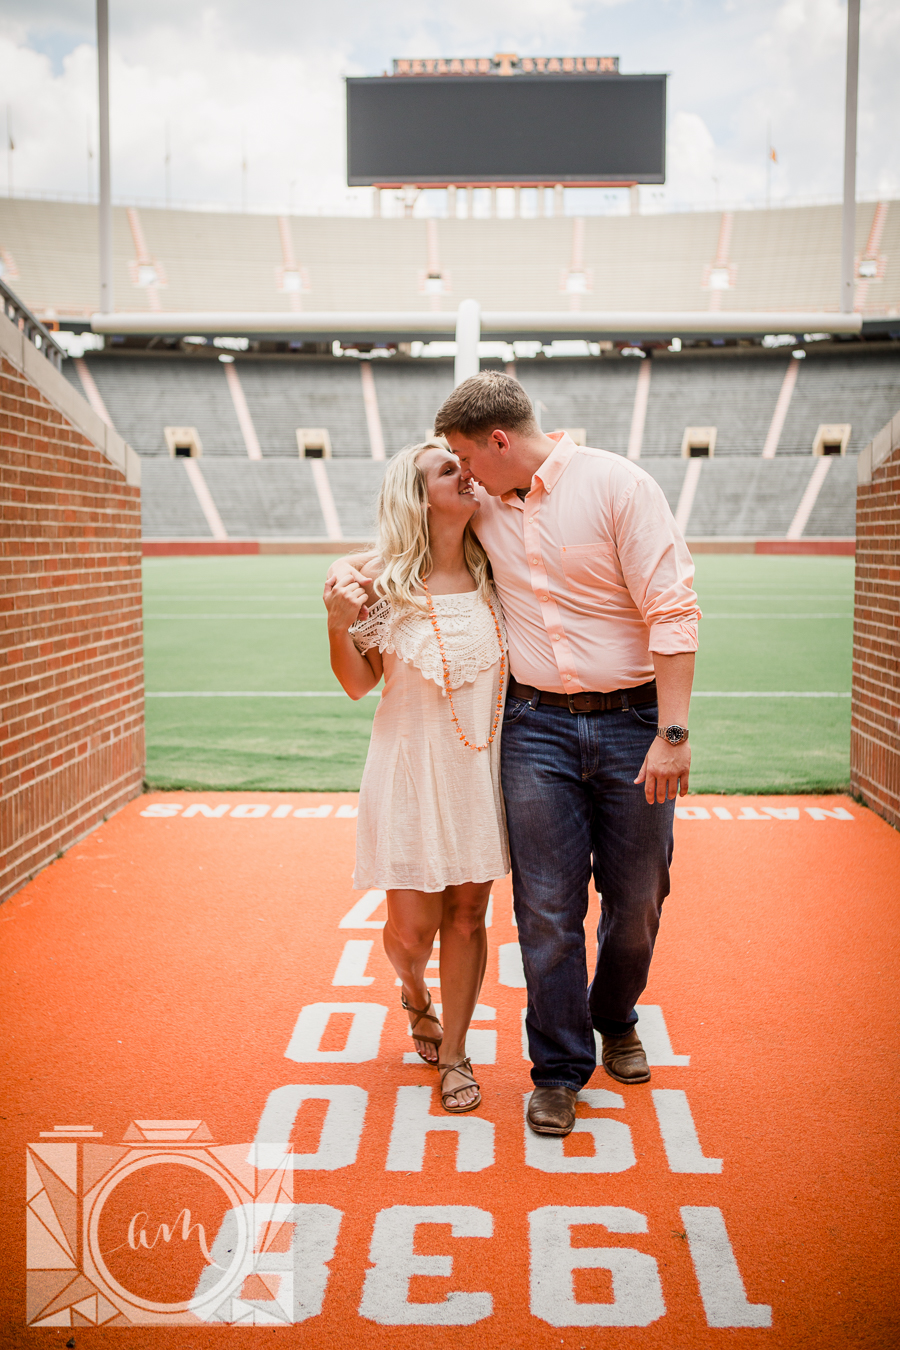 Walking in the stadium engagement photo by Knoxville Wedding Photographer, Amanda May Photos.